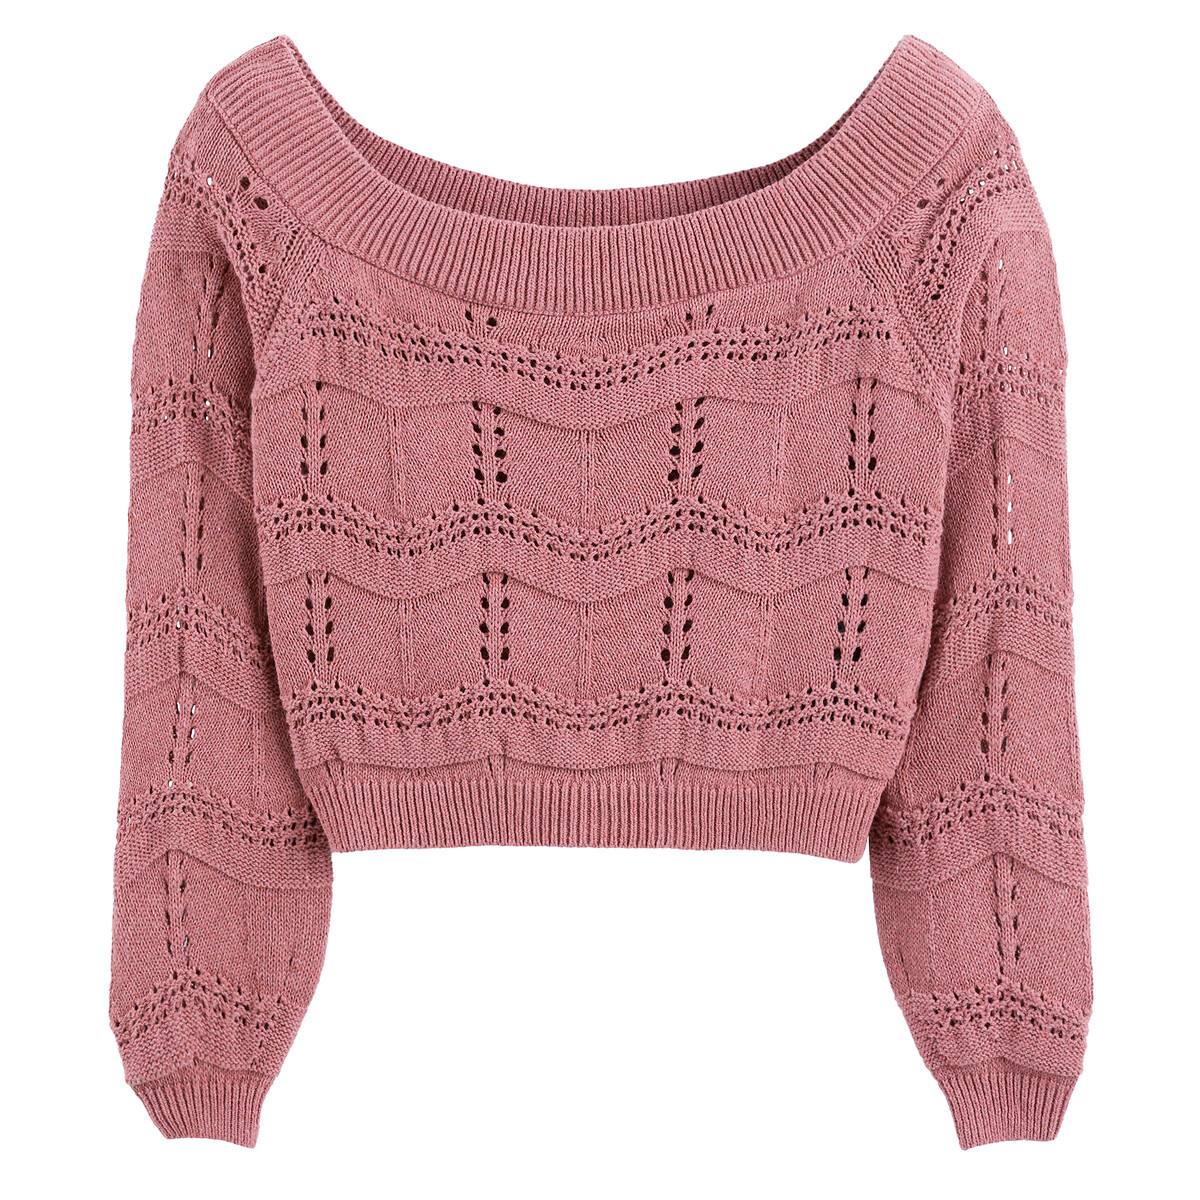 Пуловер из тонкого трикотажа вырез-лодочка S розовый